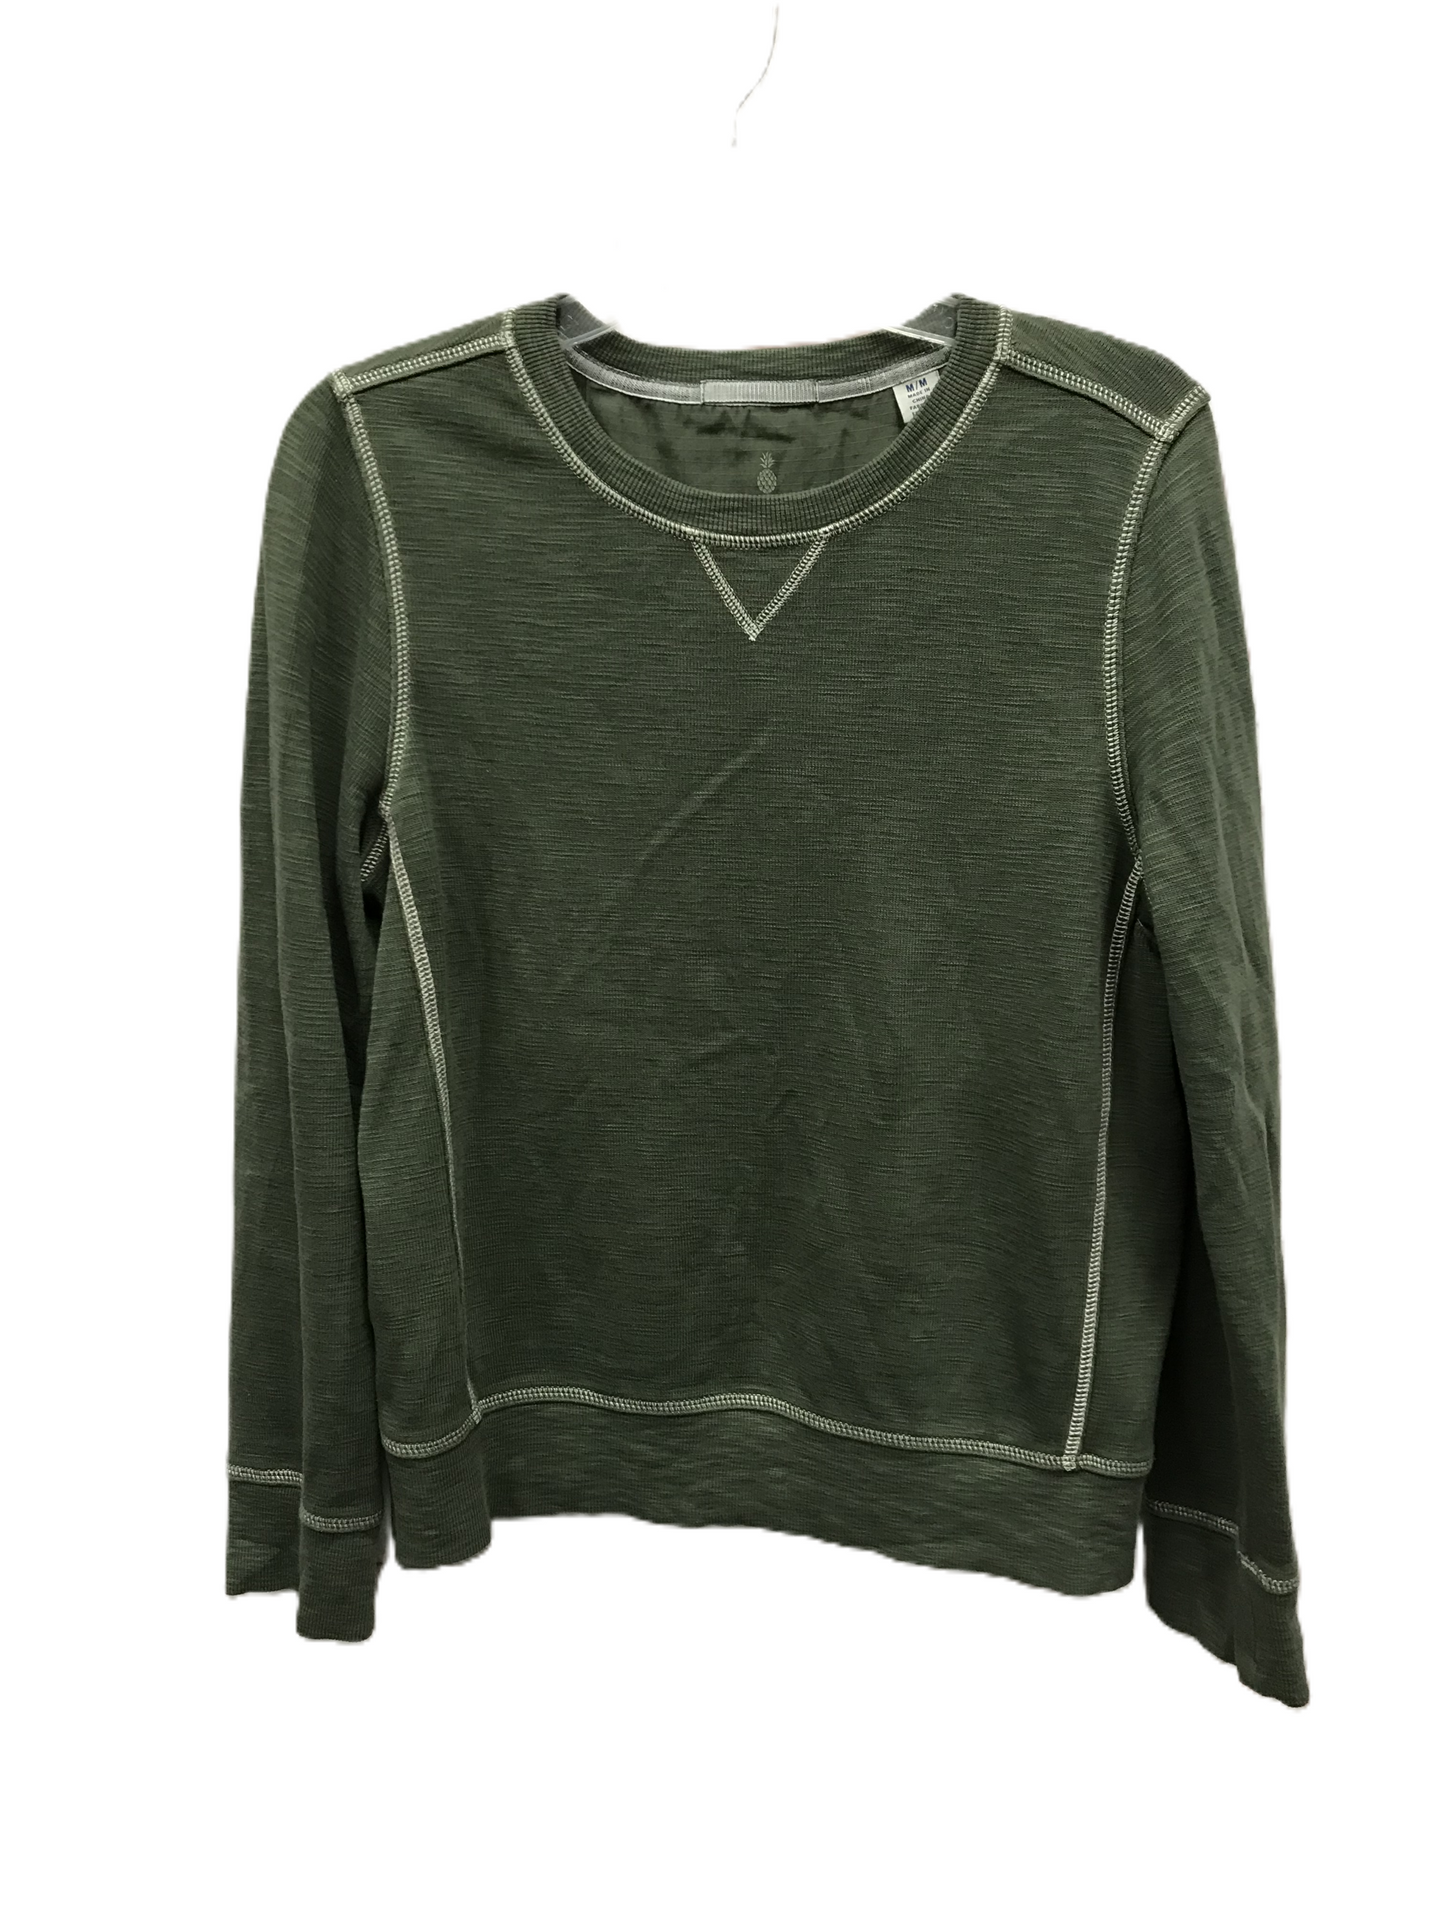 Green Sweatshirt Crewneck By Tommy Bahama, Size: M